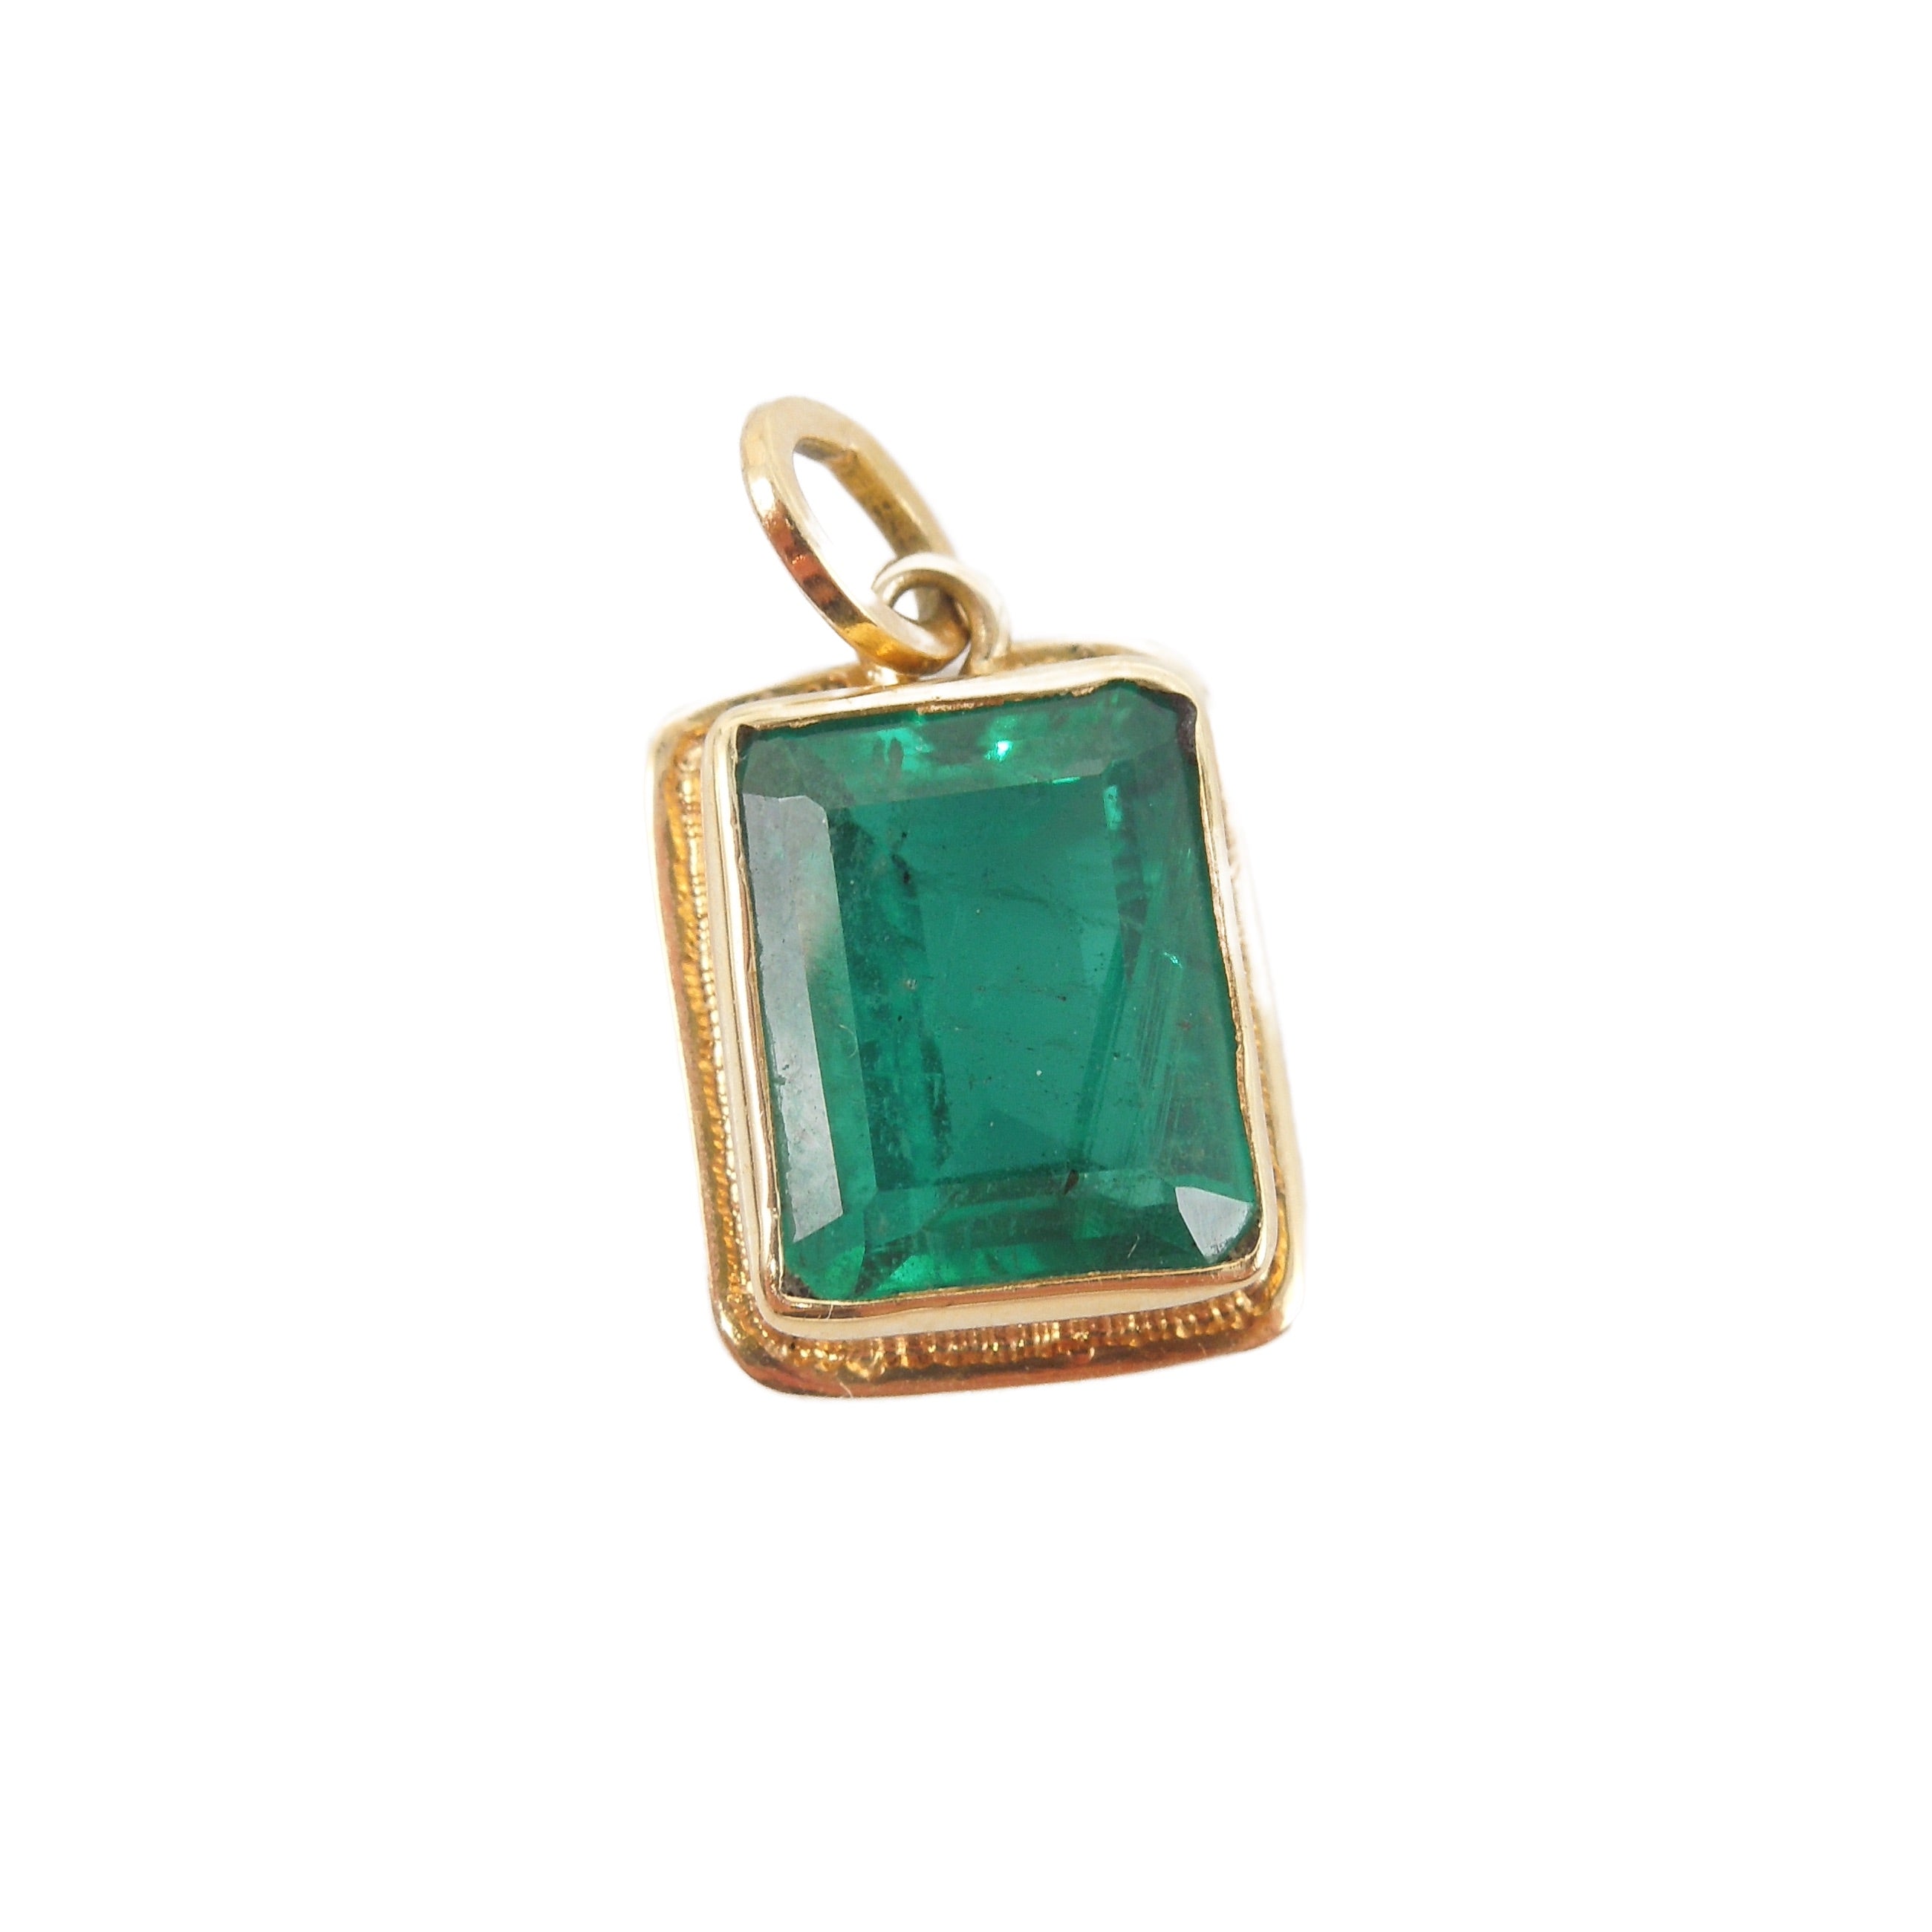 4.00 ct Emerald Cut Colombian Emerald in Yellow Gold Bezel - Pendant